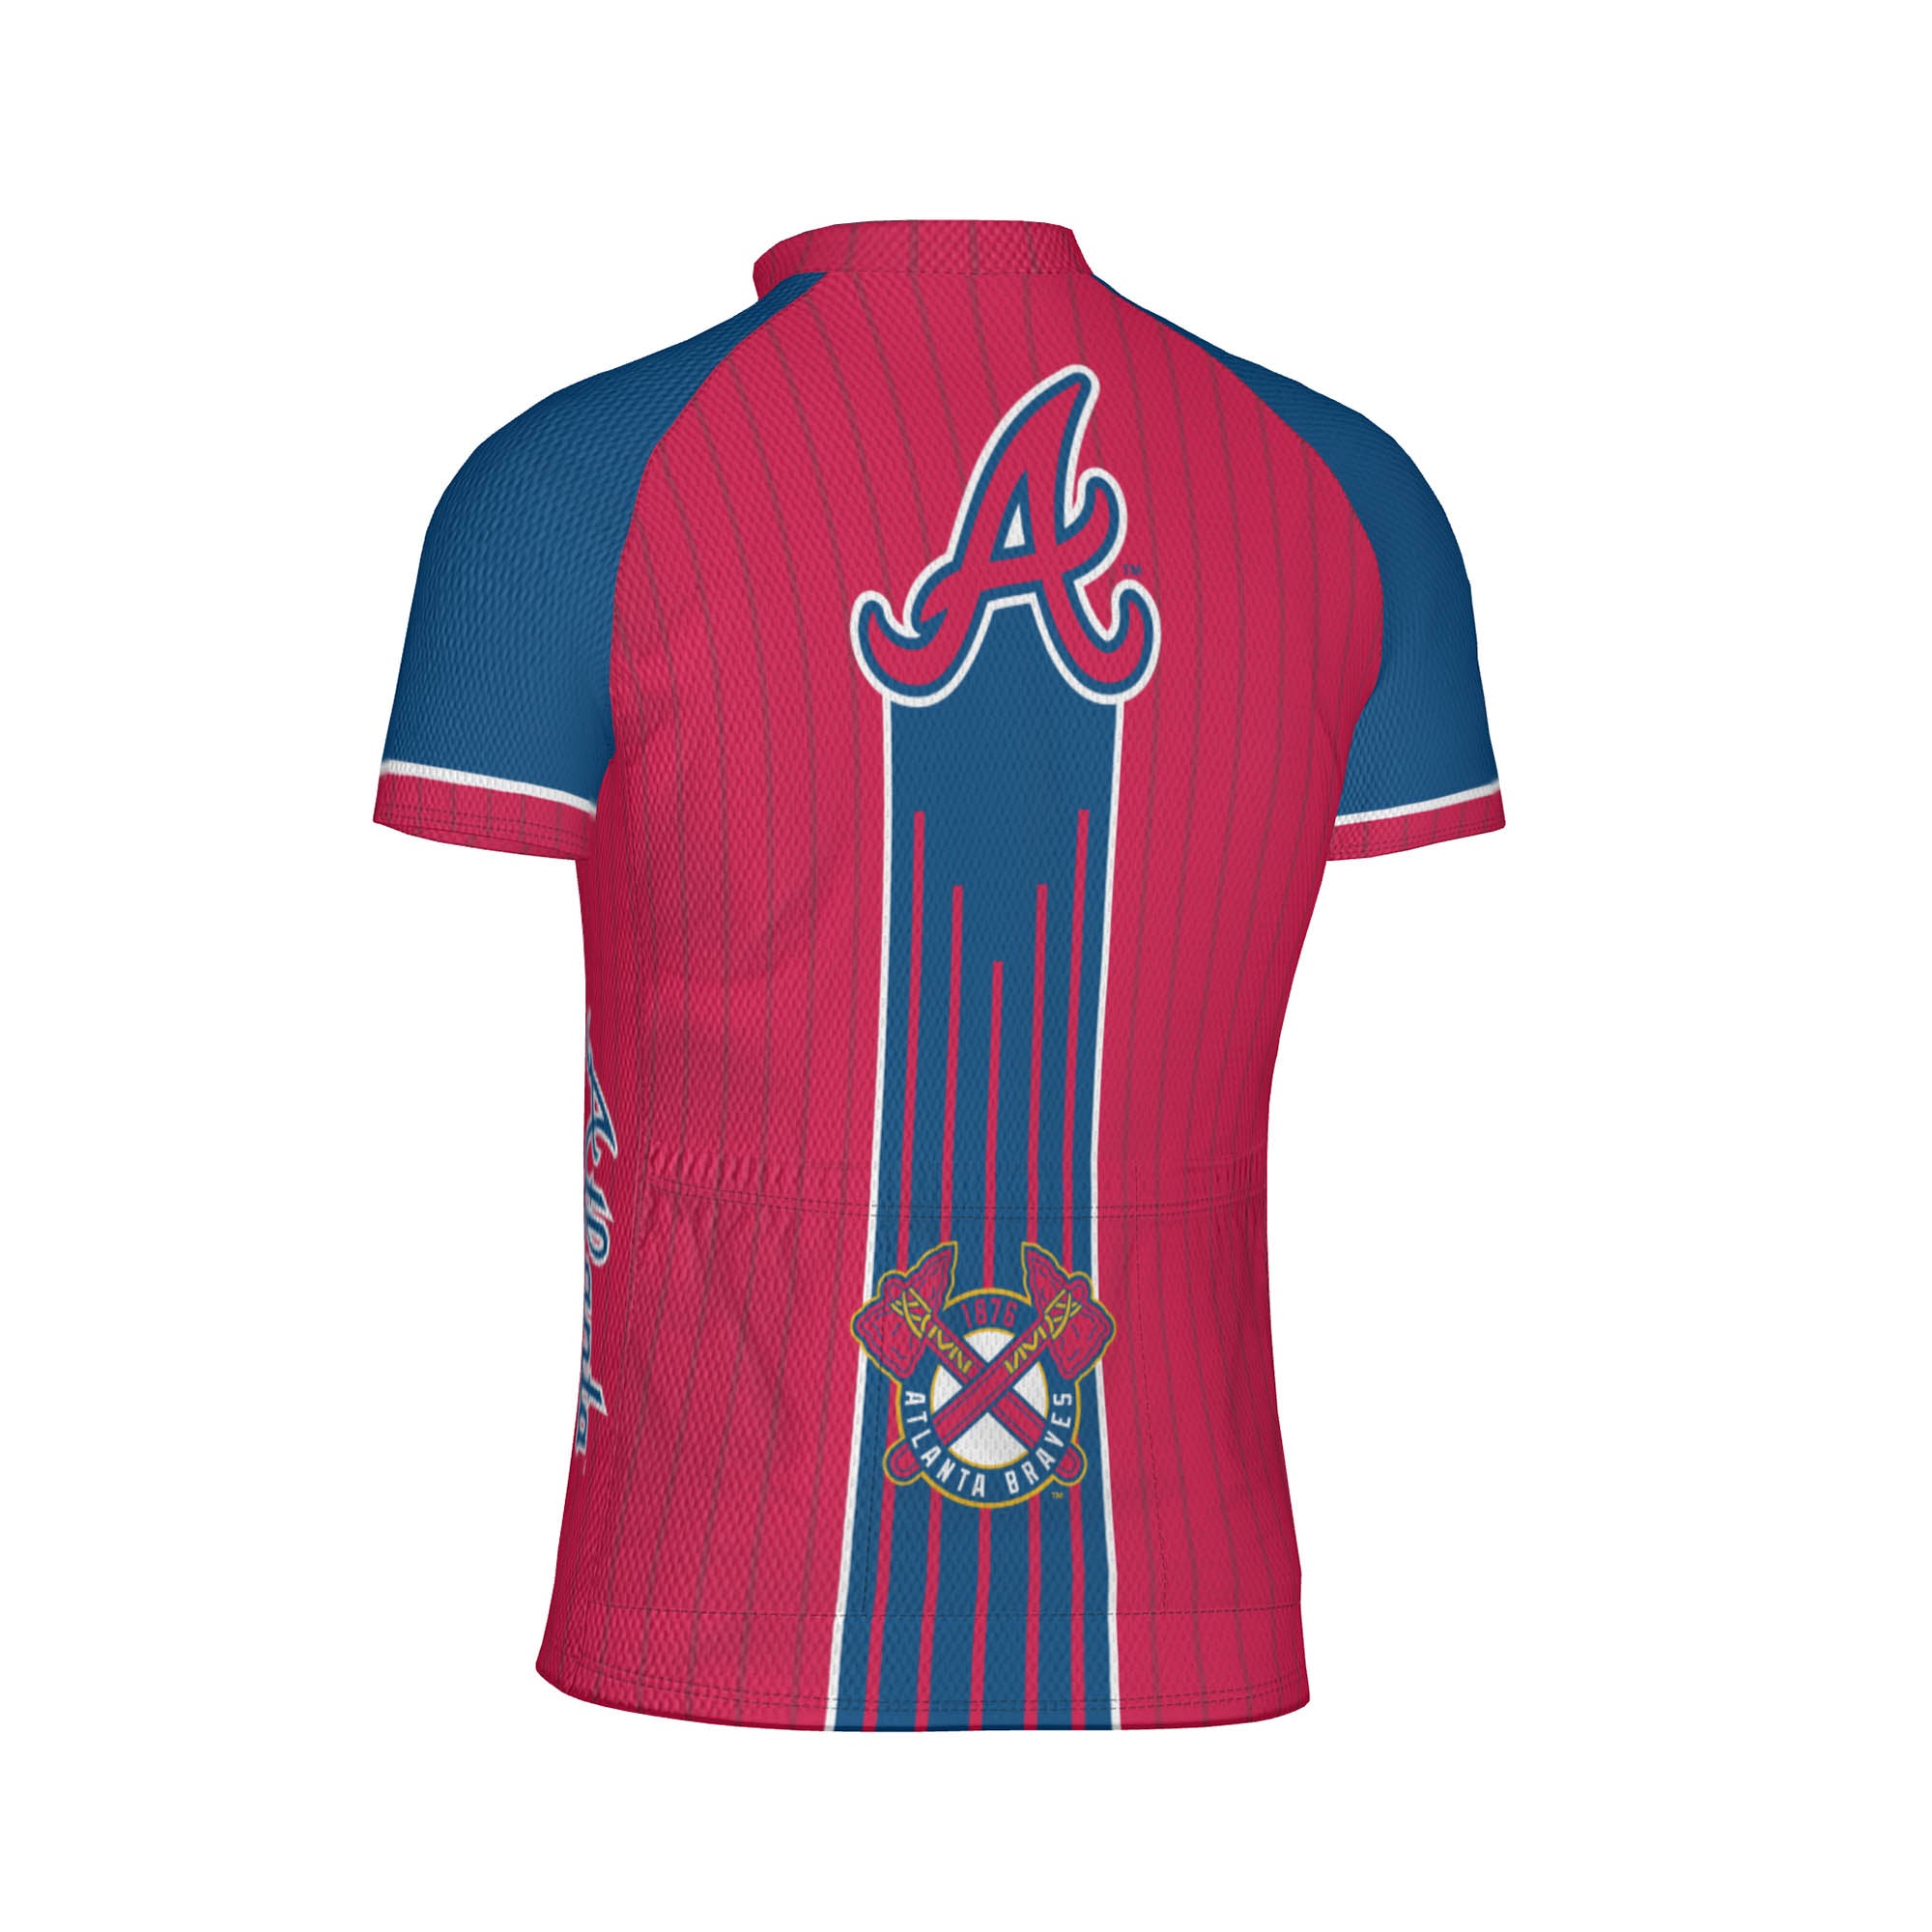 Atlanta Braves Jersey – Primal Wear